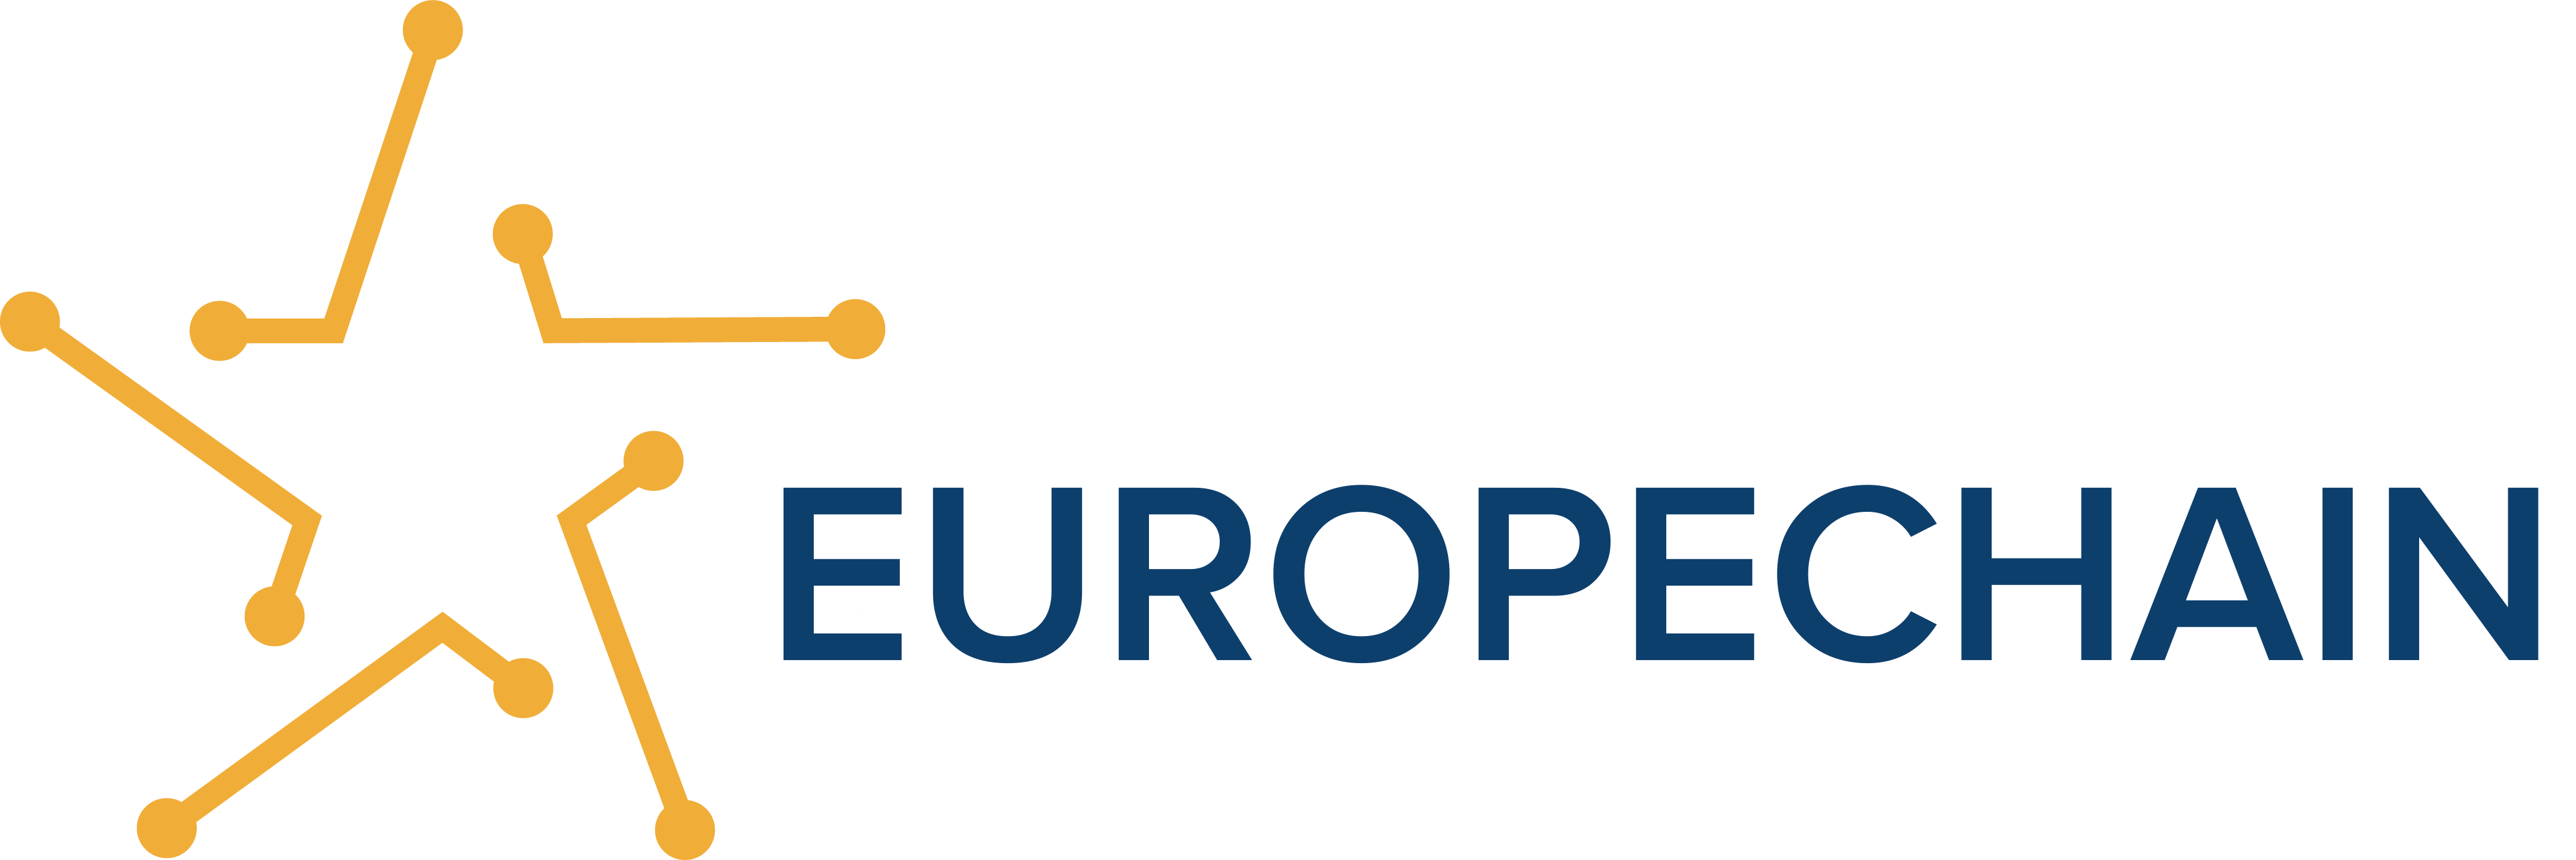 Europechain logo